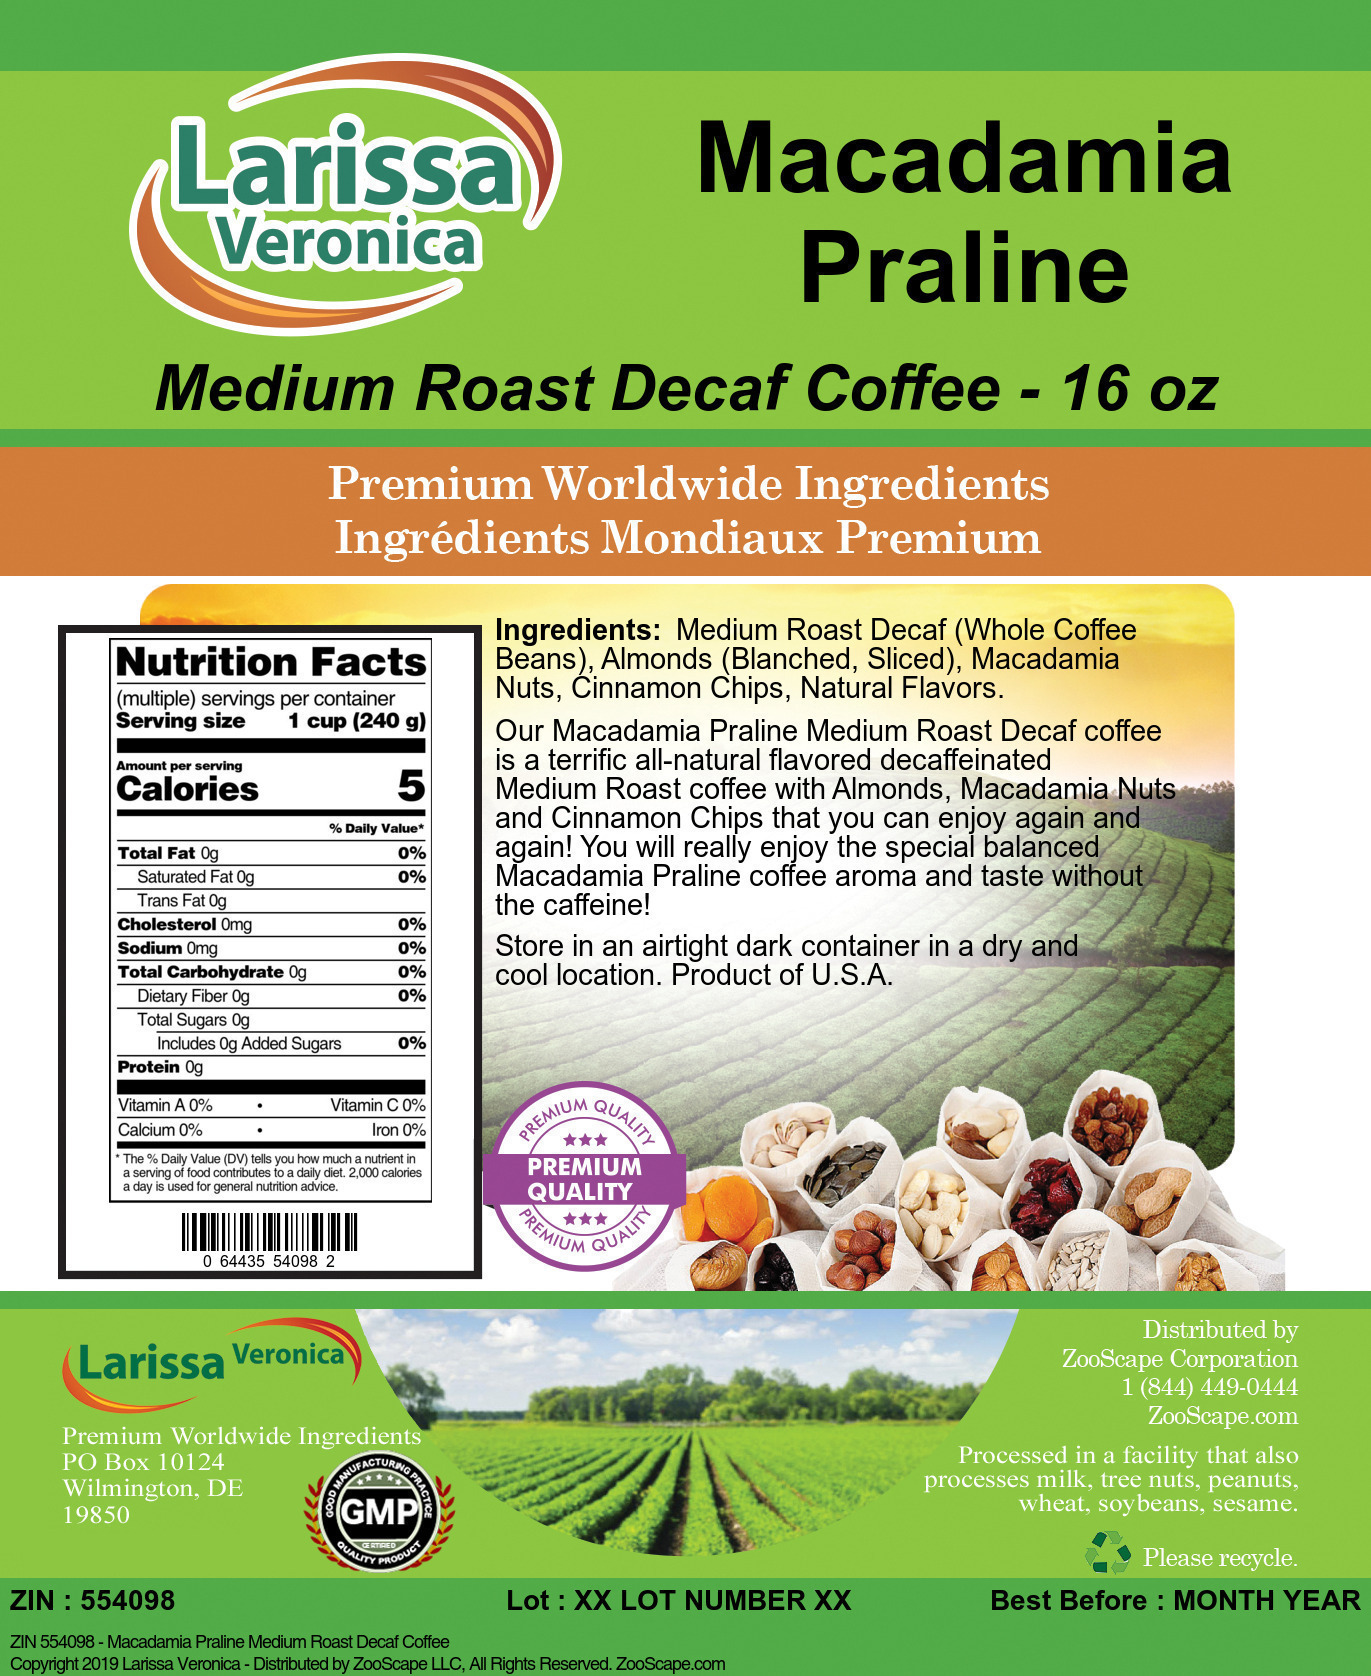 Macadamia Praline Medium Roast Decaf Coffee - Label